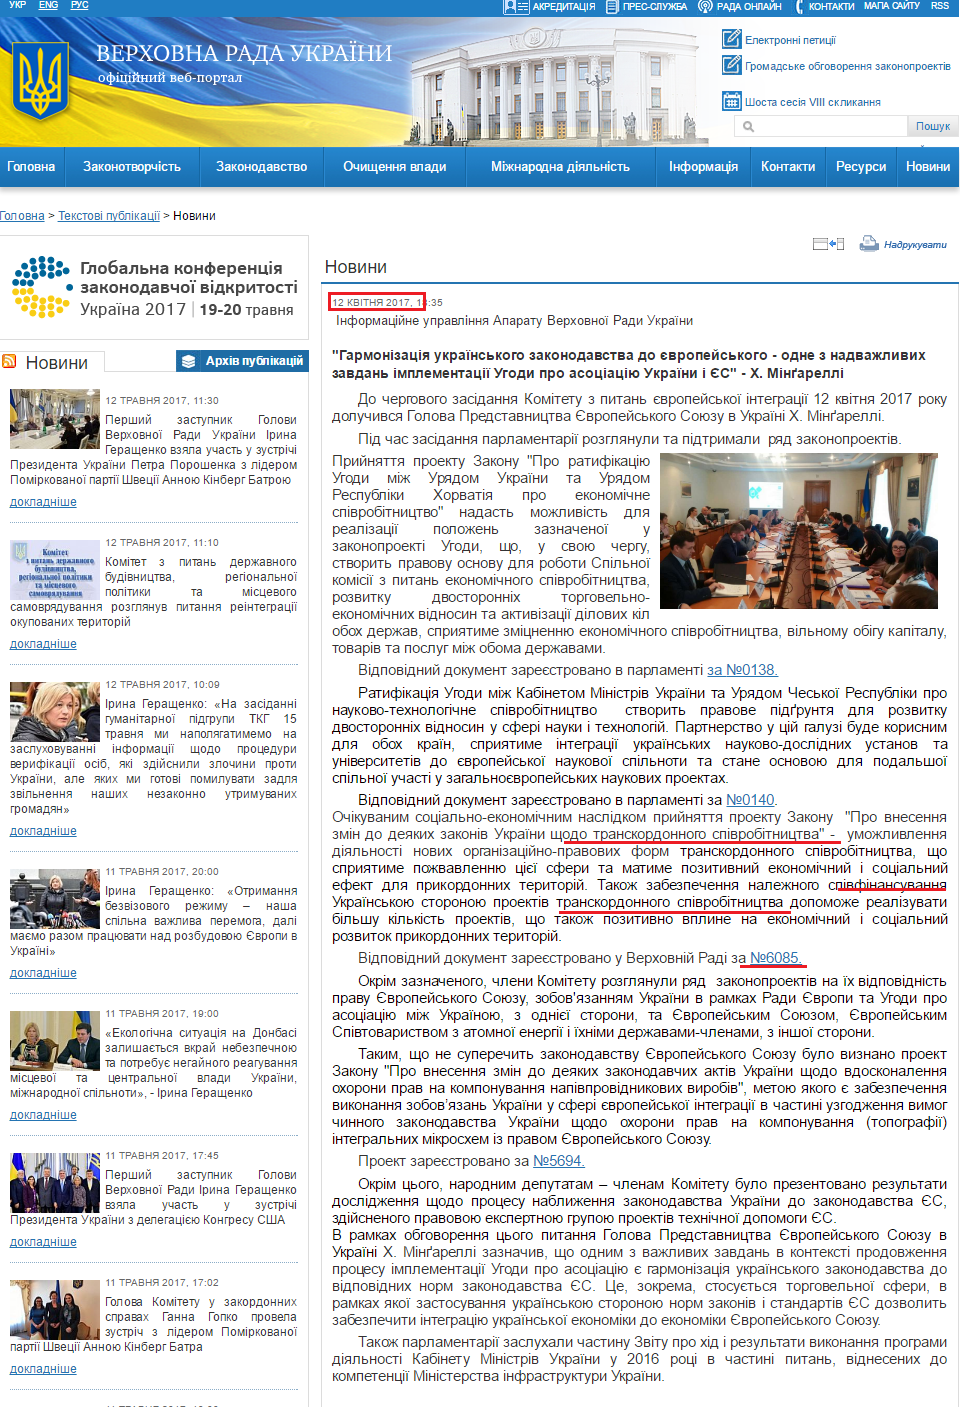 http://rada.gov.ua/news/Novyny/143582.html